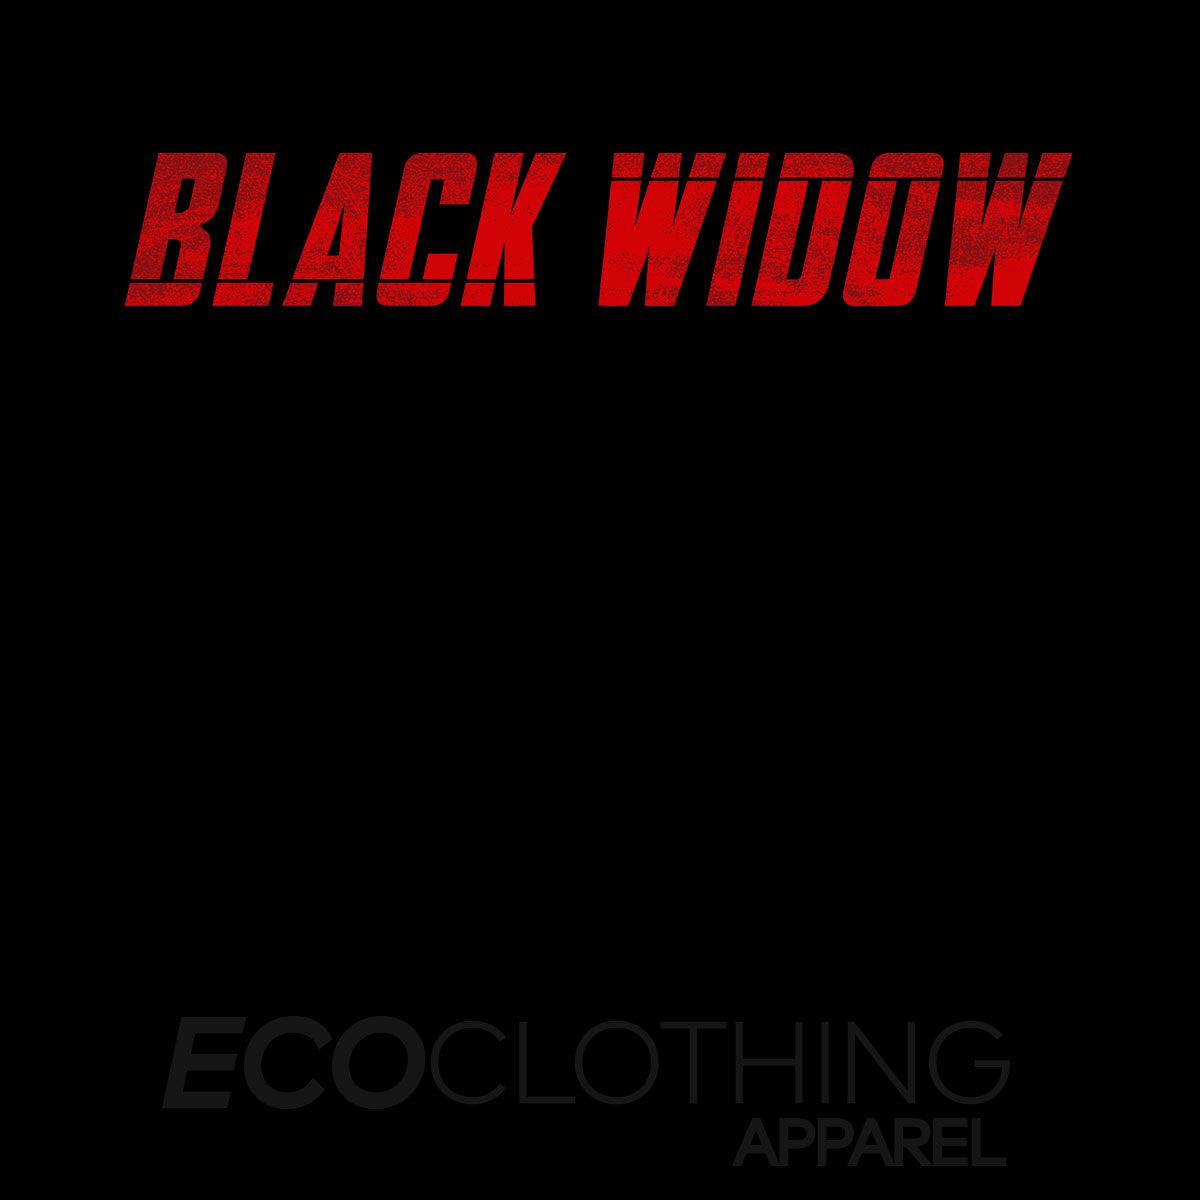 Black Widow Action Hero Marvel Tee Adventure Superhero Adult Kids Gift Top Unisex Typography - Kuzi Tees